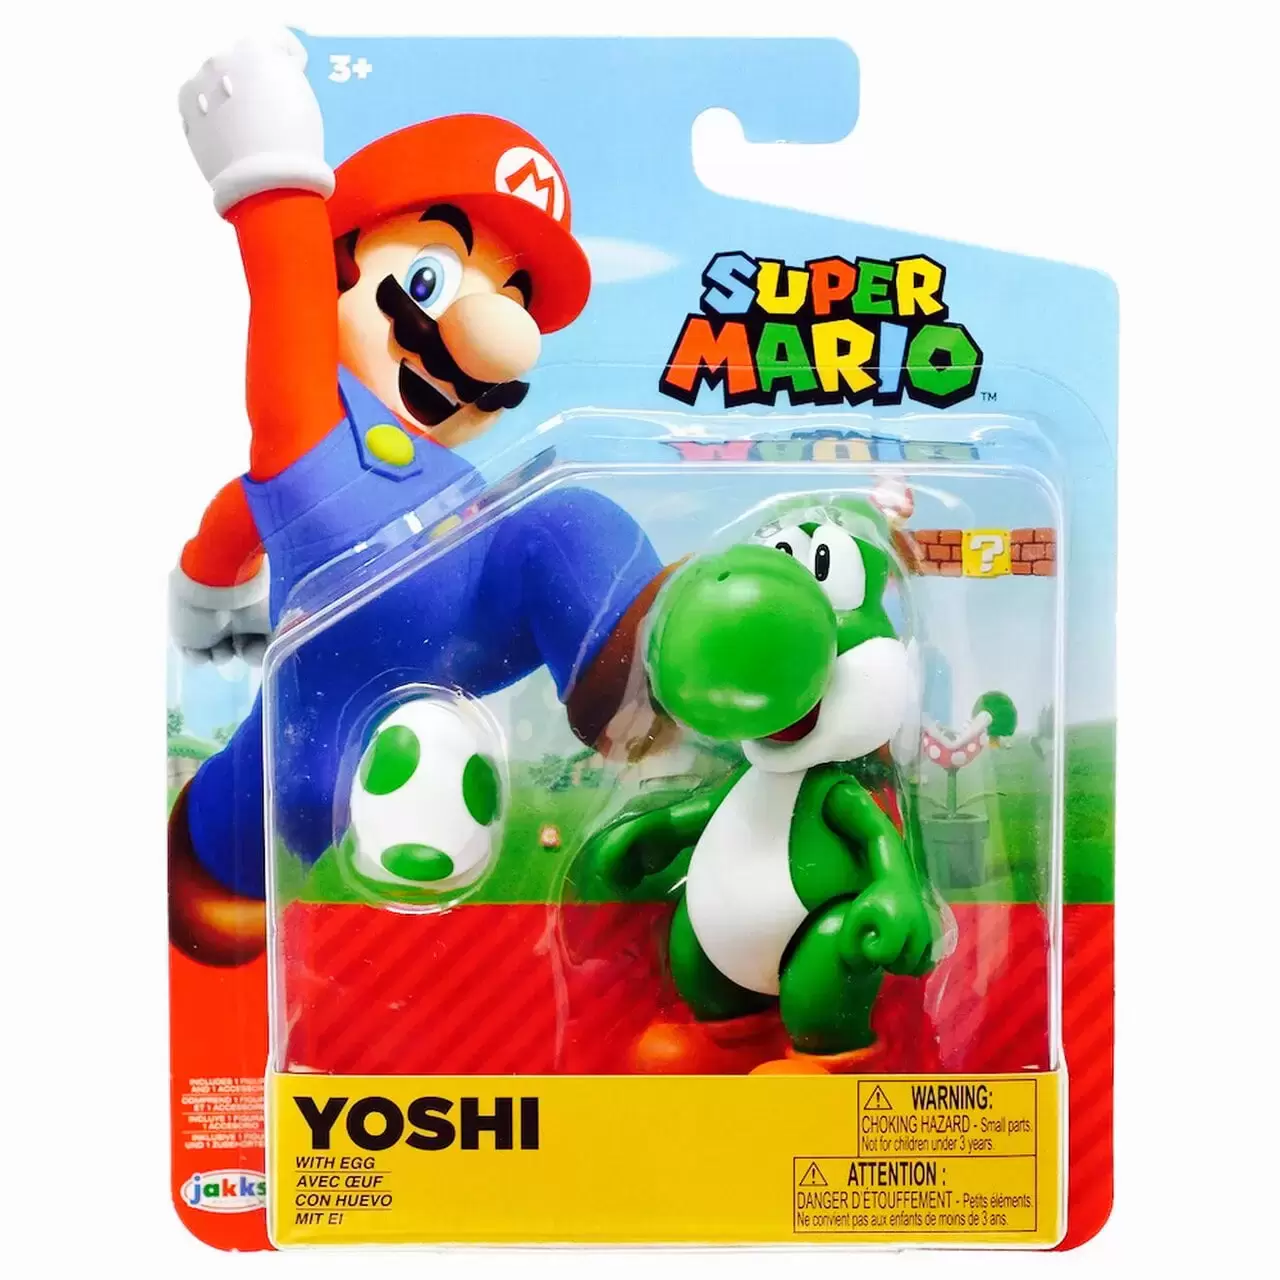 World of Nintendo - Yoshi with Egg